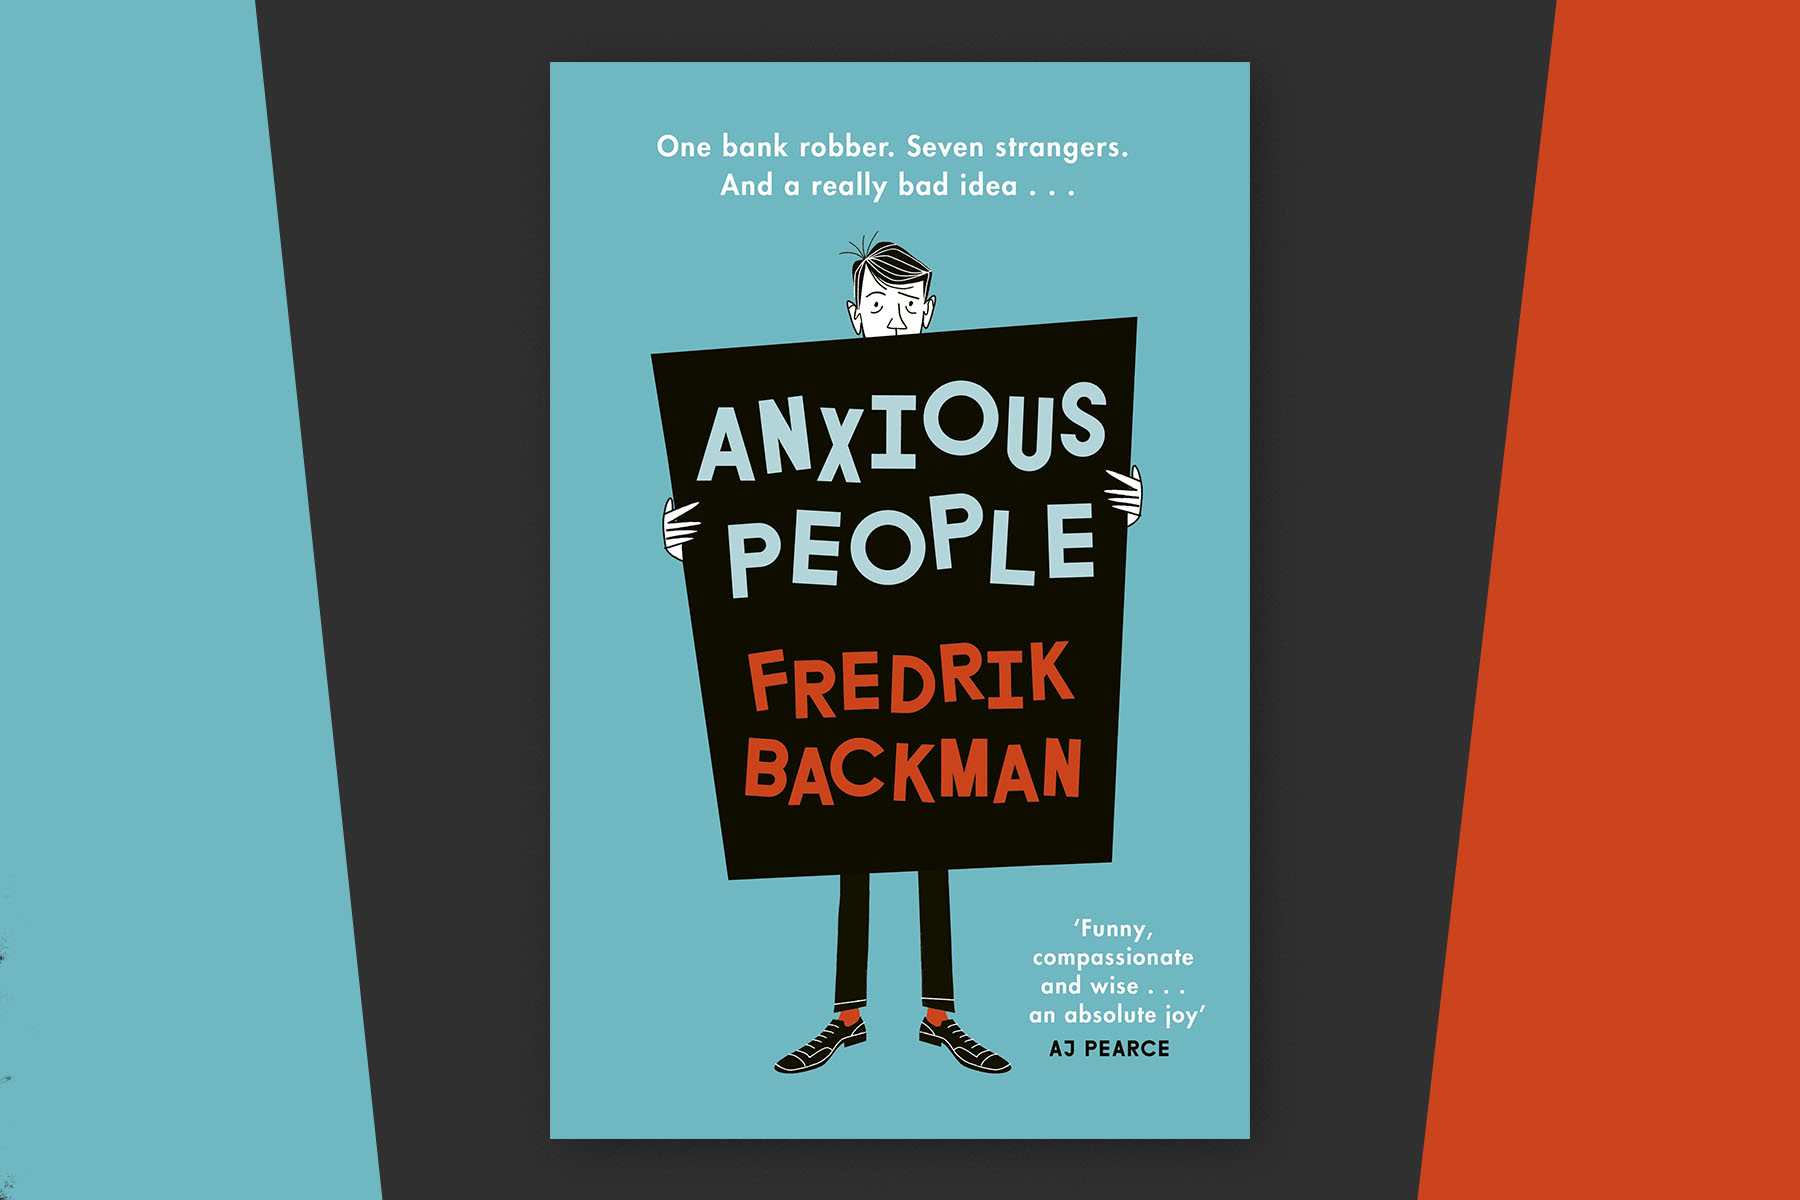 Fredrik Backman's 'Anxious People'. Ryan MacEachern/Penguin